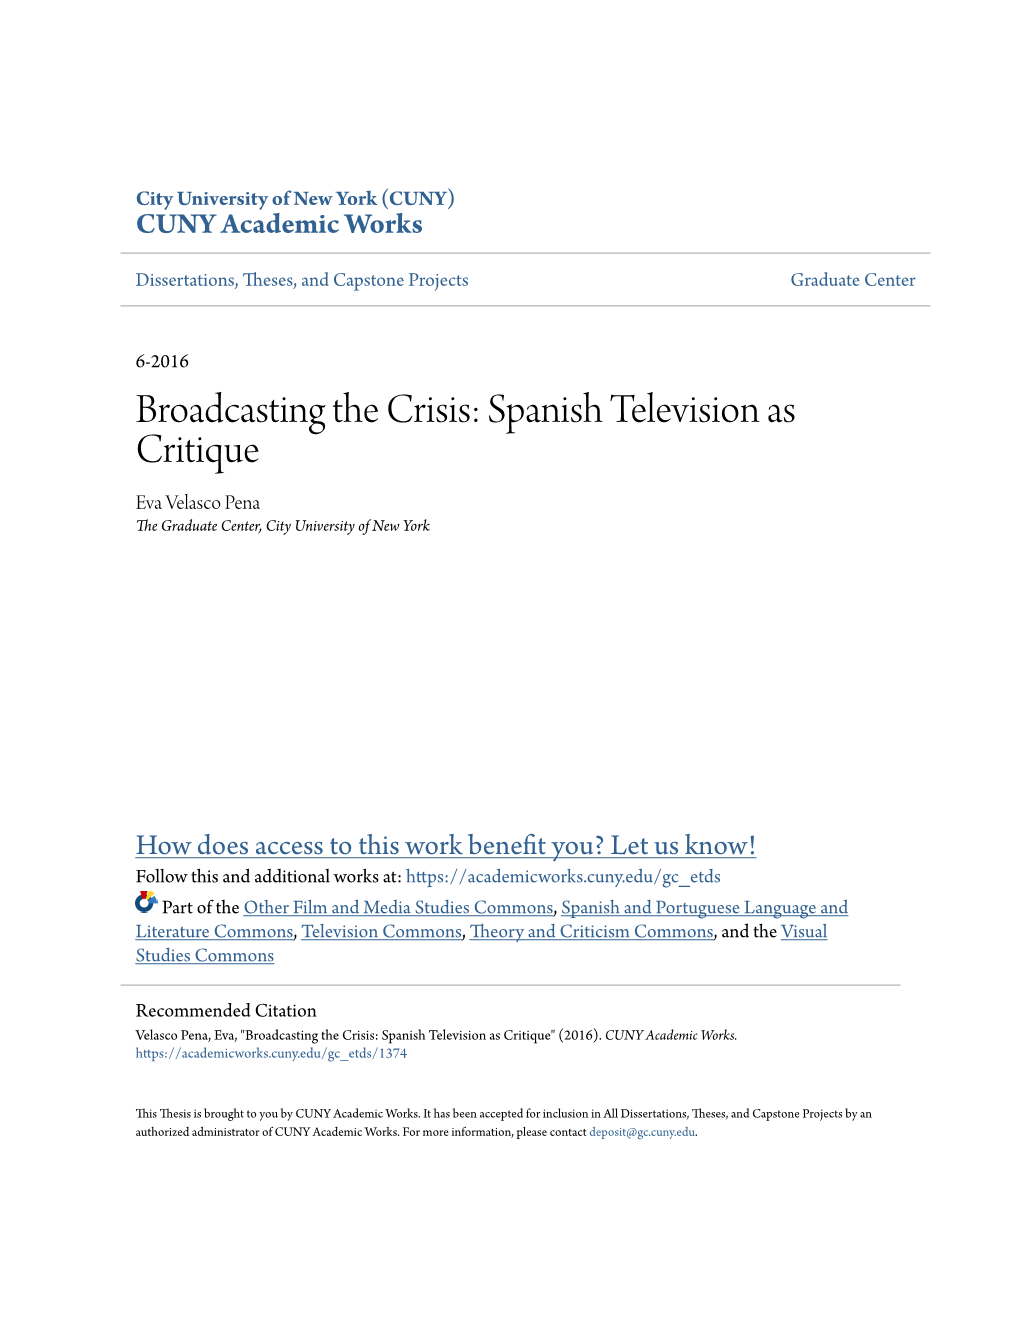 Broadcasting the Crisis: Spanish Television As Critique Eva Velasco Pena the Graduate Center, City University of New York